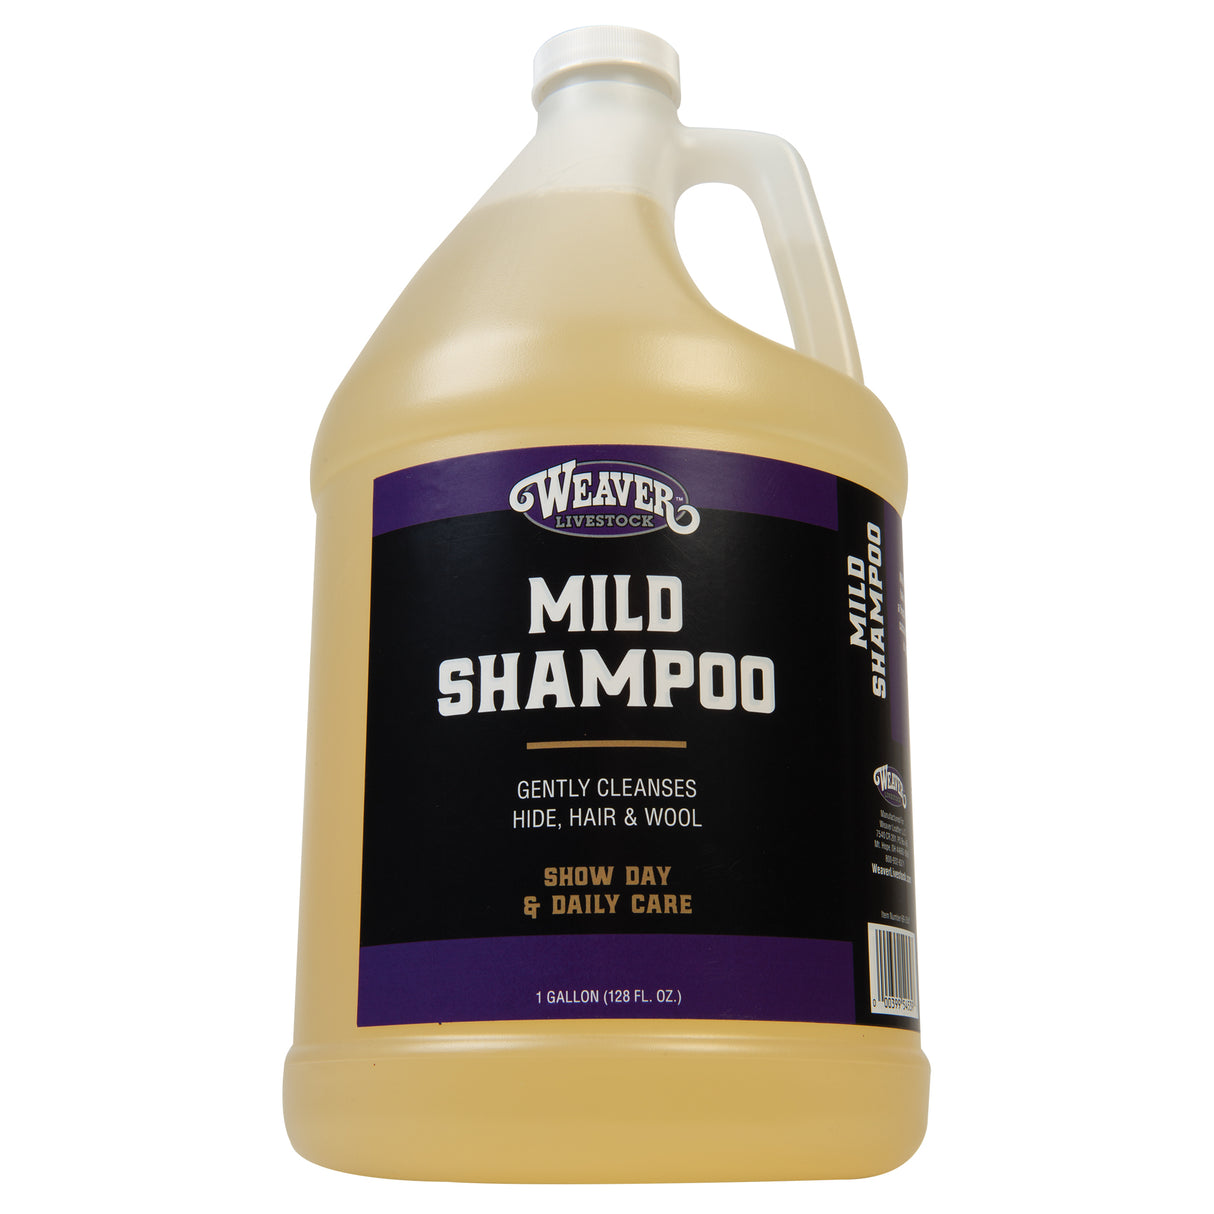 Mild Shampoo